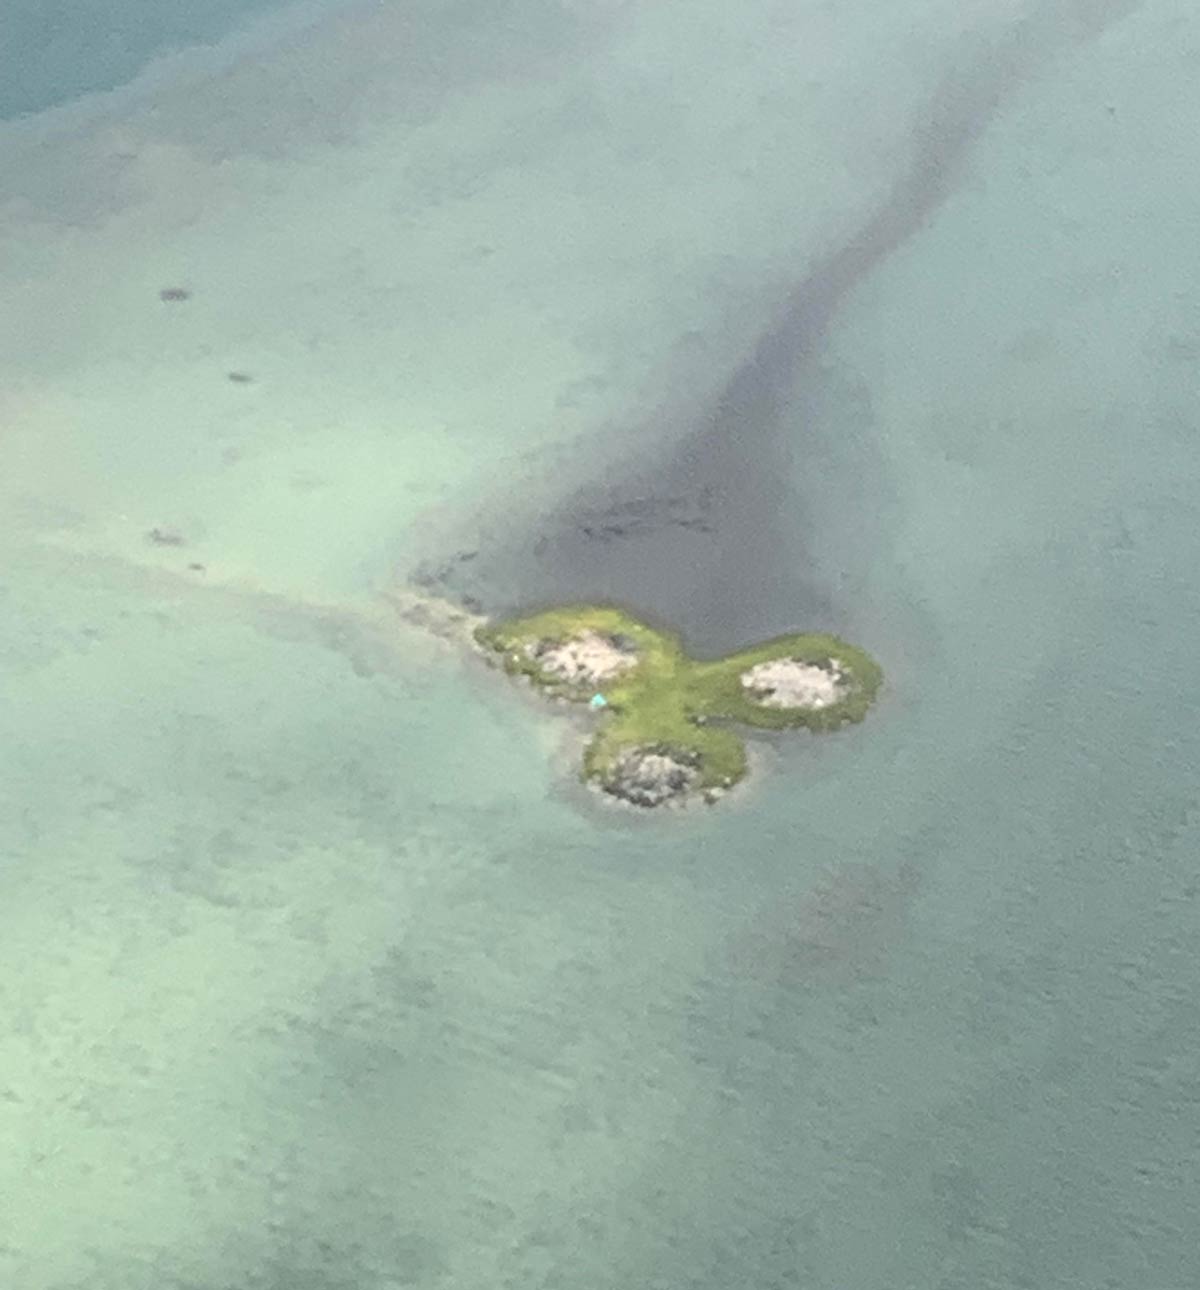 Found fidget spinner island near Hawaii